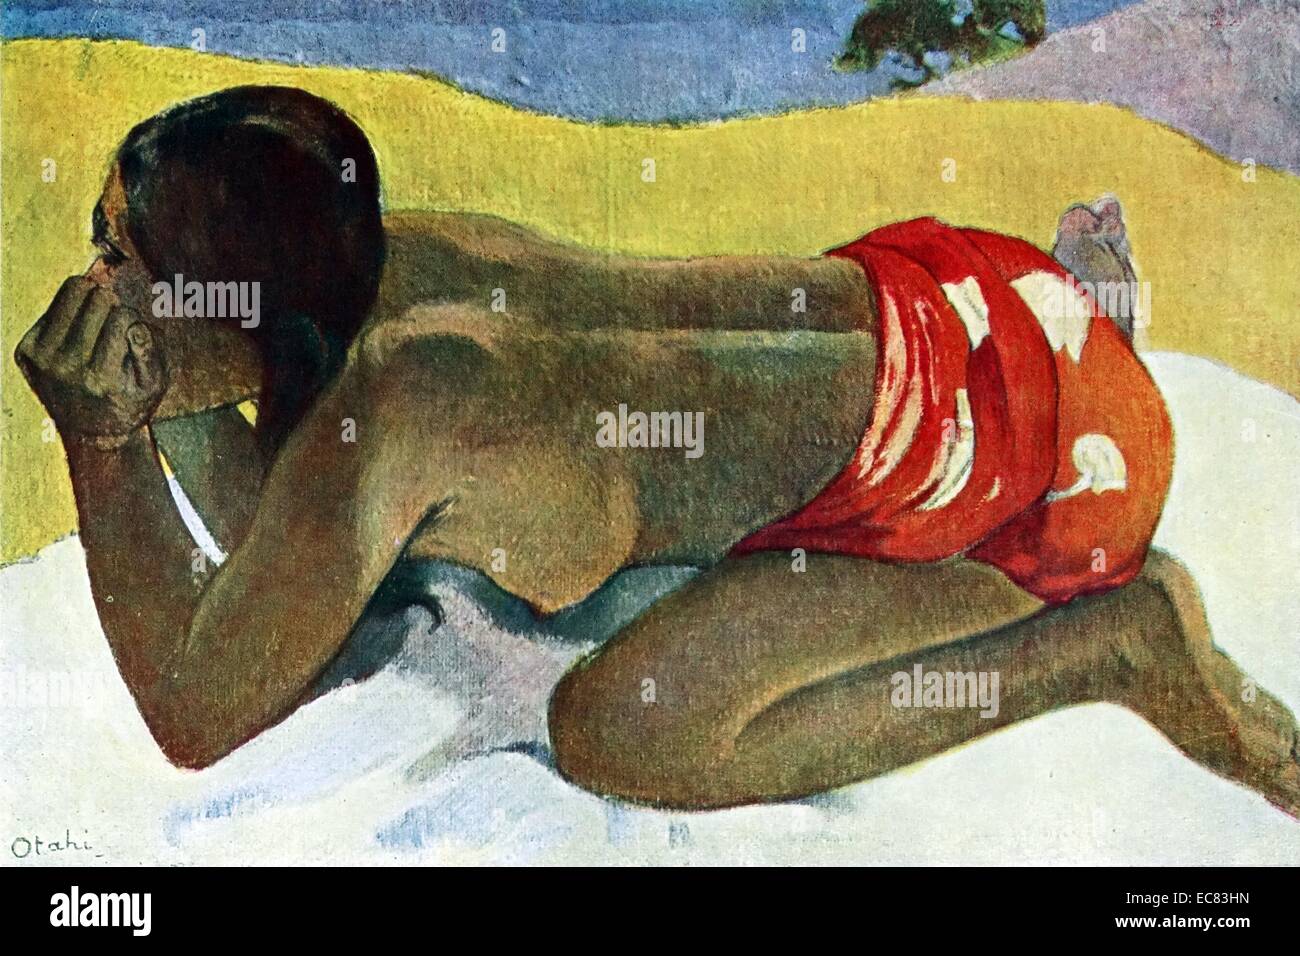 Otahi (alone) by Paul Gauguin (1848–1903) 1893 Stock Photo